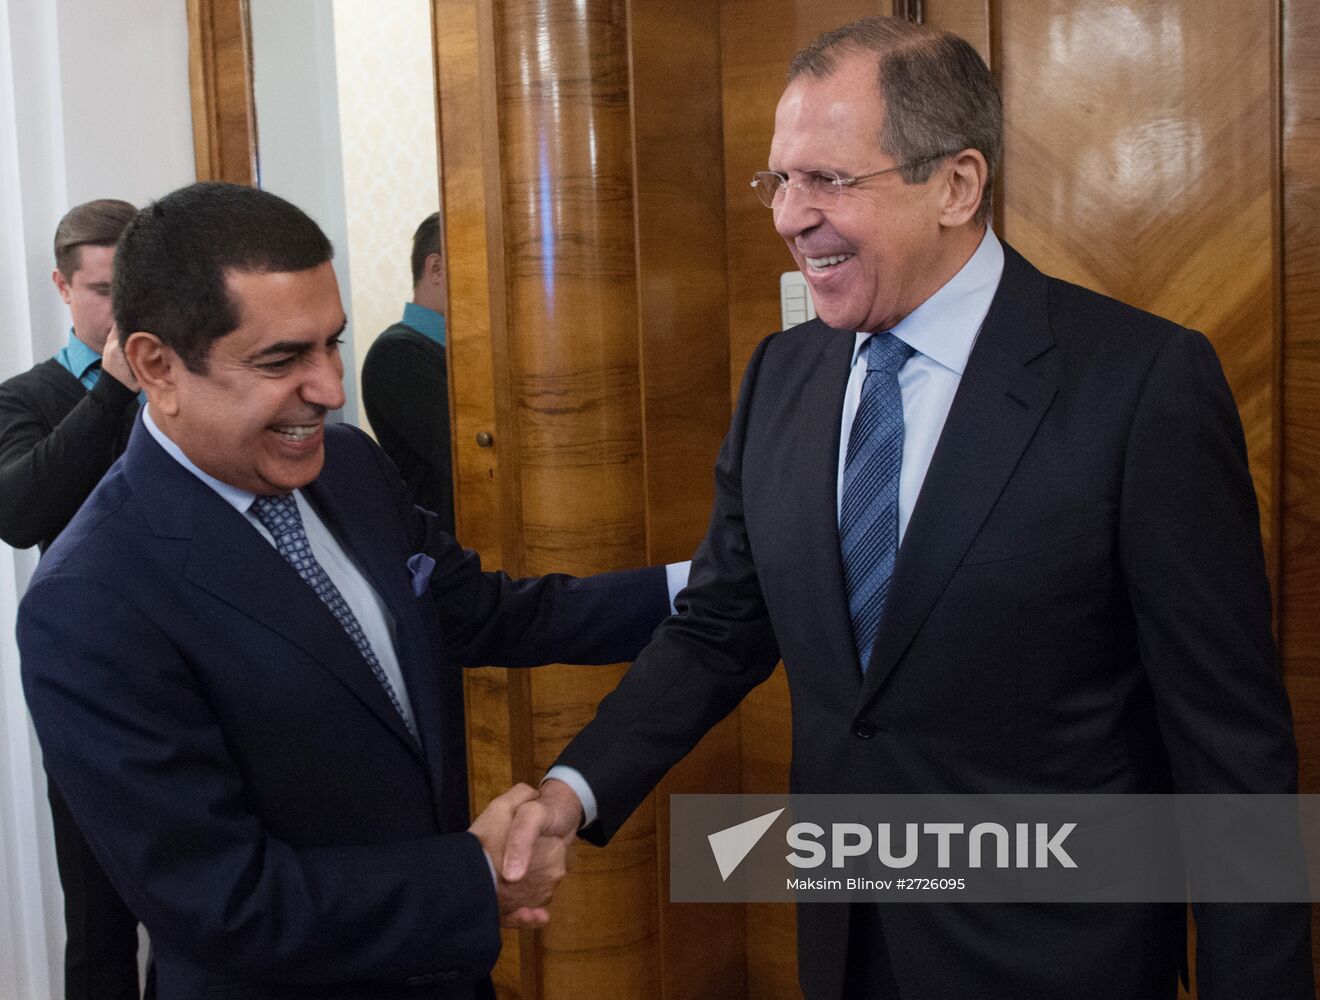 Russian Foreign Minister Sergei Lavrov meets with UN High Representative for the Alliance of Civilizations Nassir Abdulaziz Al-Nasser